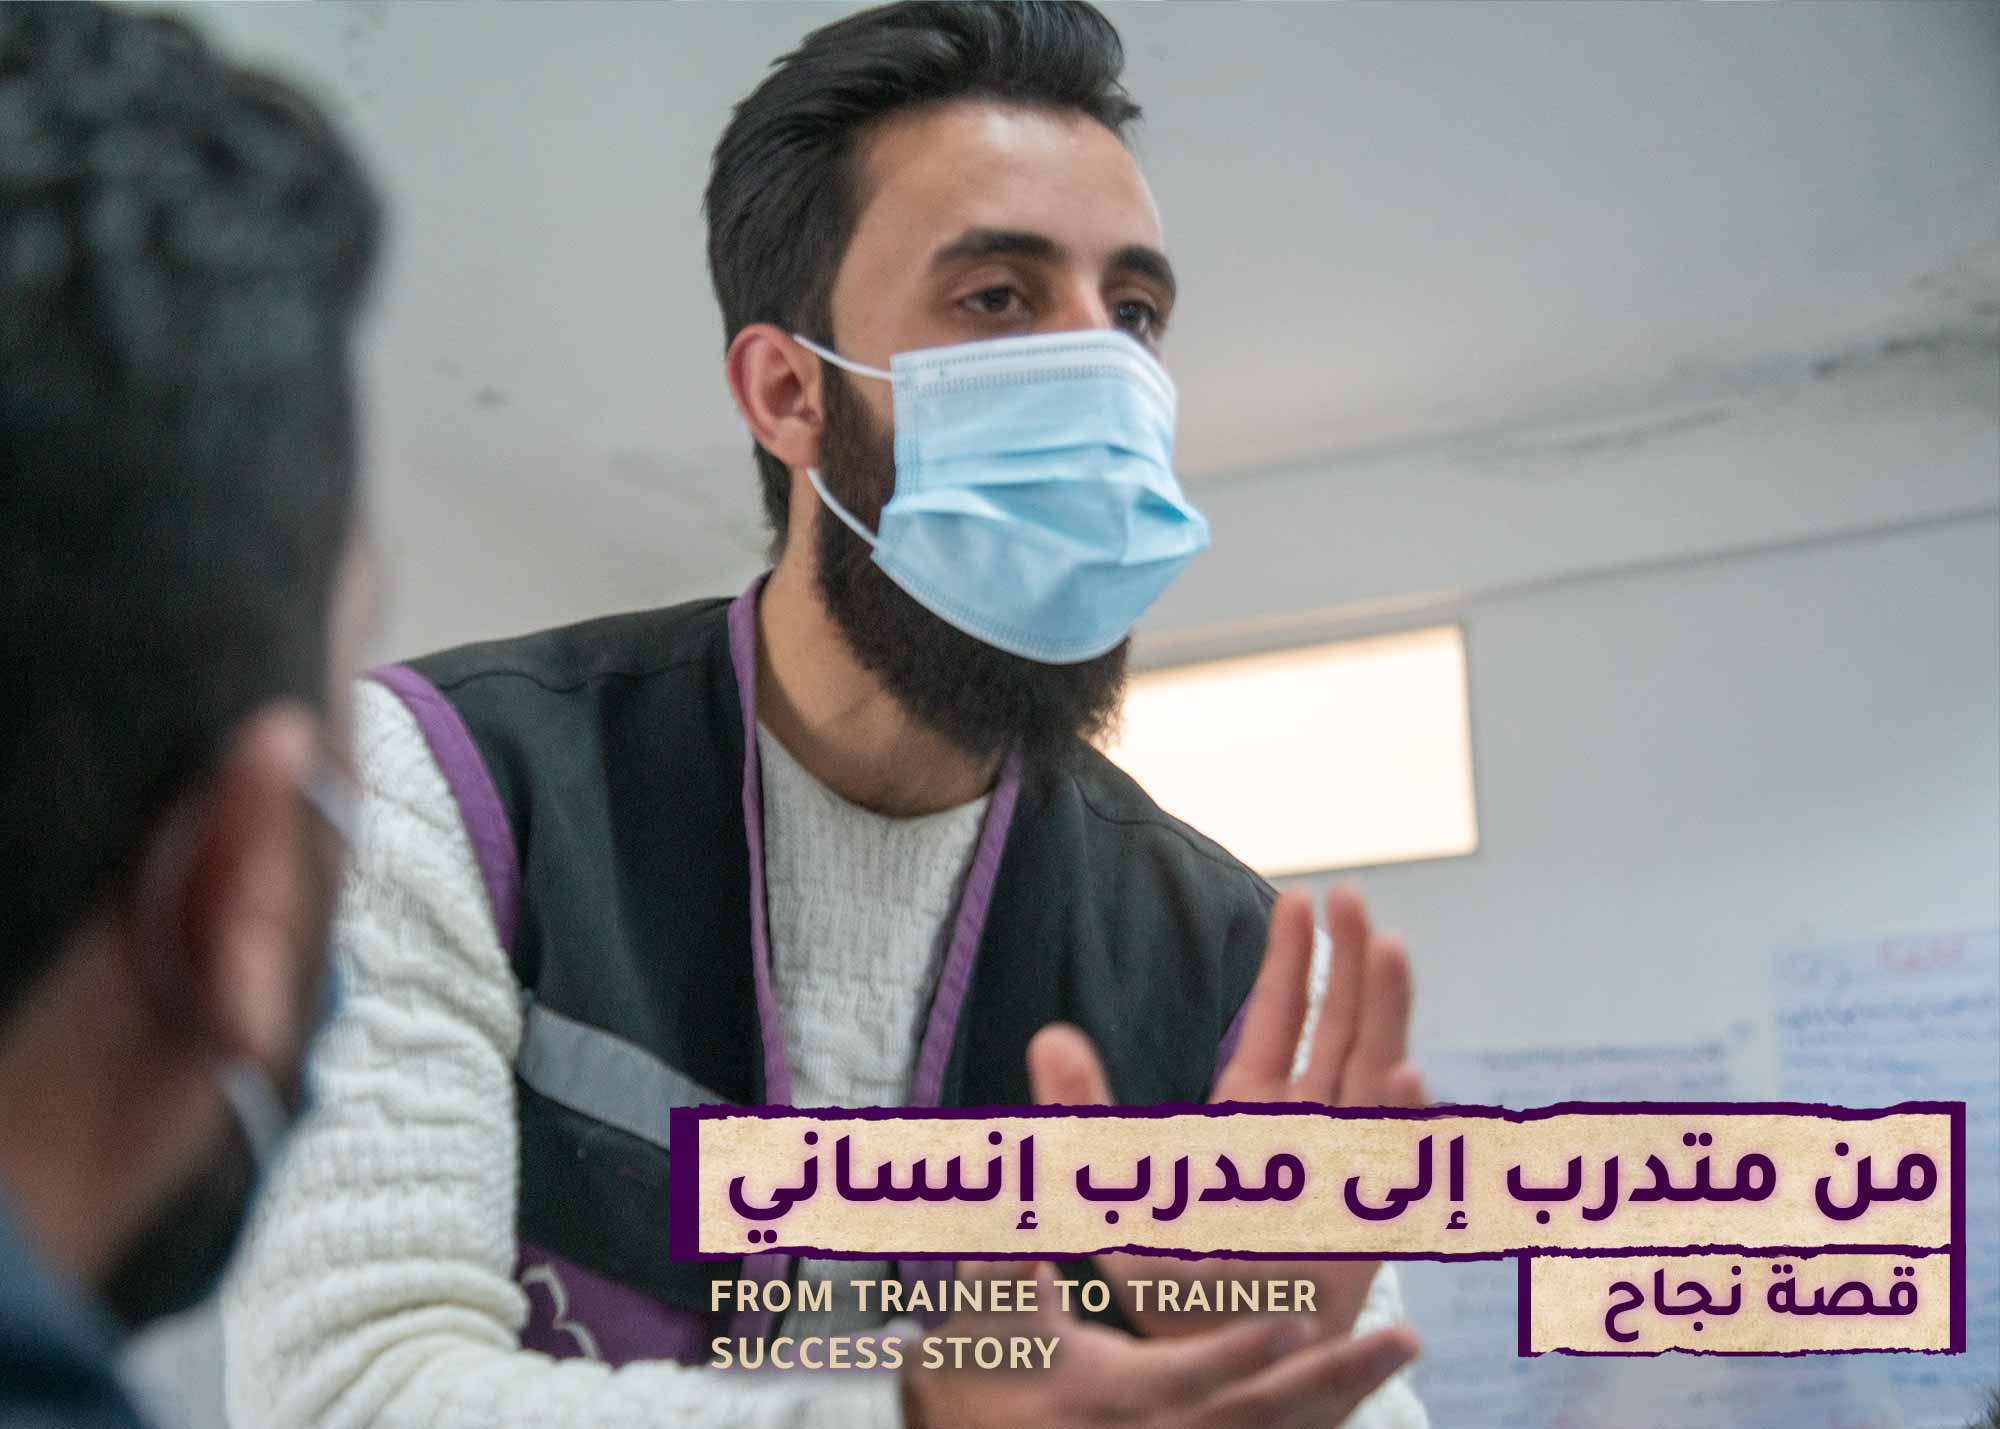 A trainee from northwest of Syria, Idlib